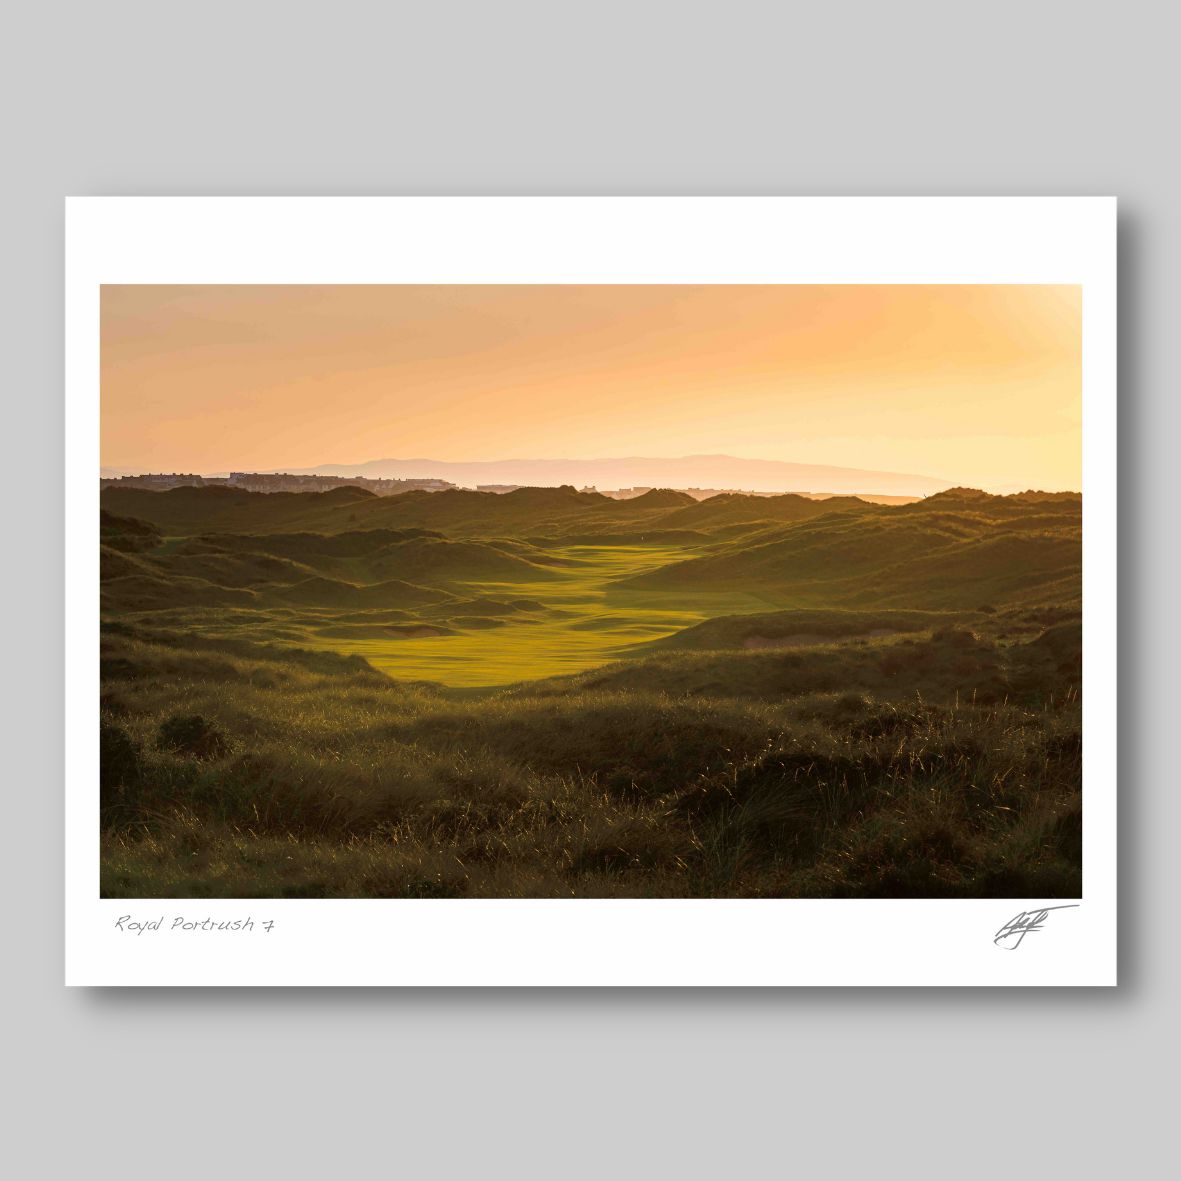 Royal Portrush Golf Club 7th Photography print by Adam Toth